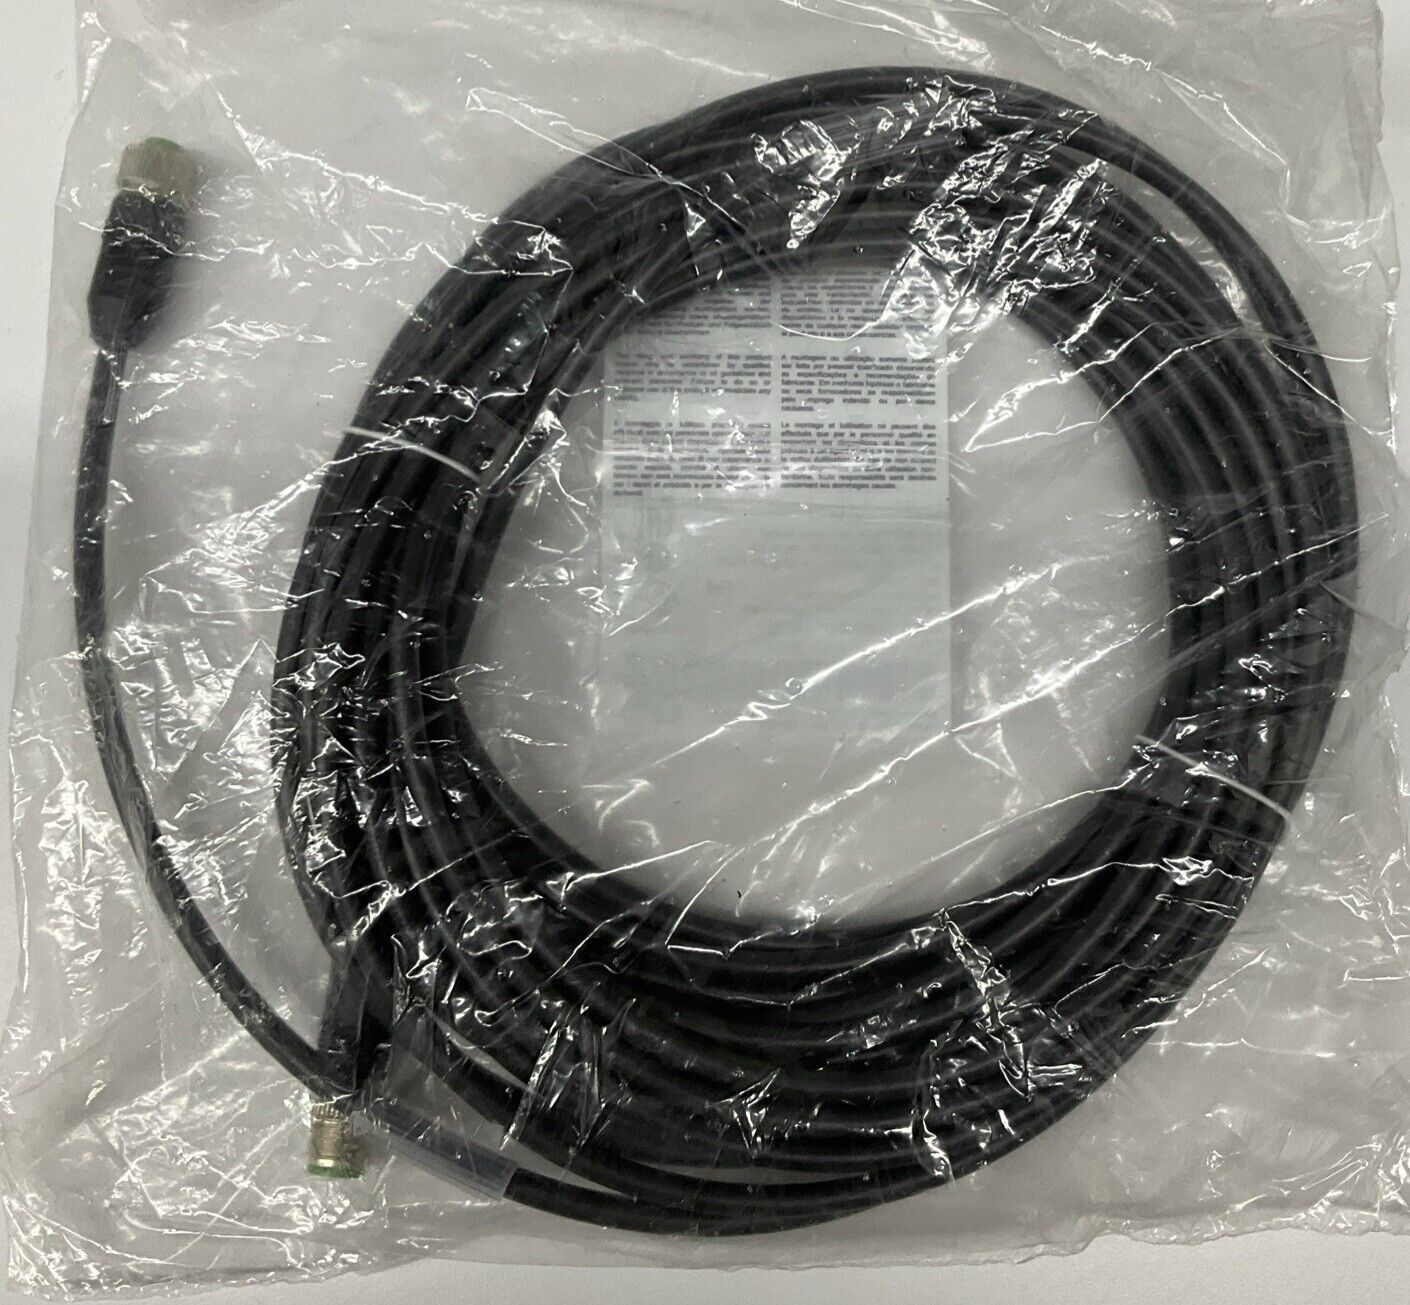 Murr 7000-40521-6431000 M12, Male/Female Shielded Cable 10M (CBL134)